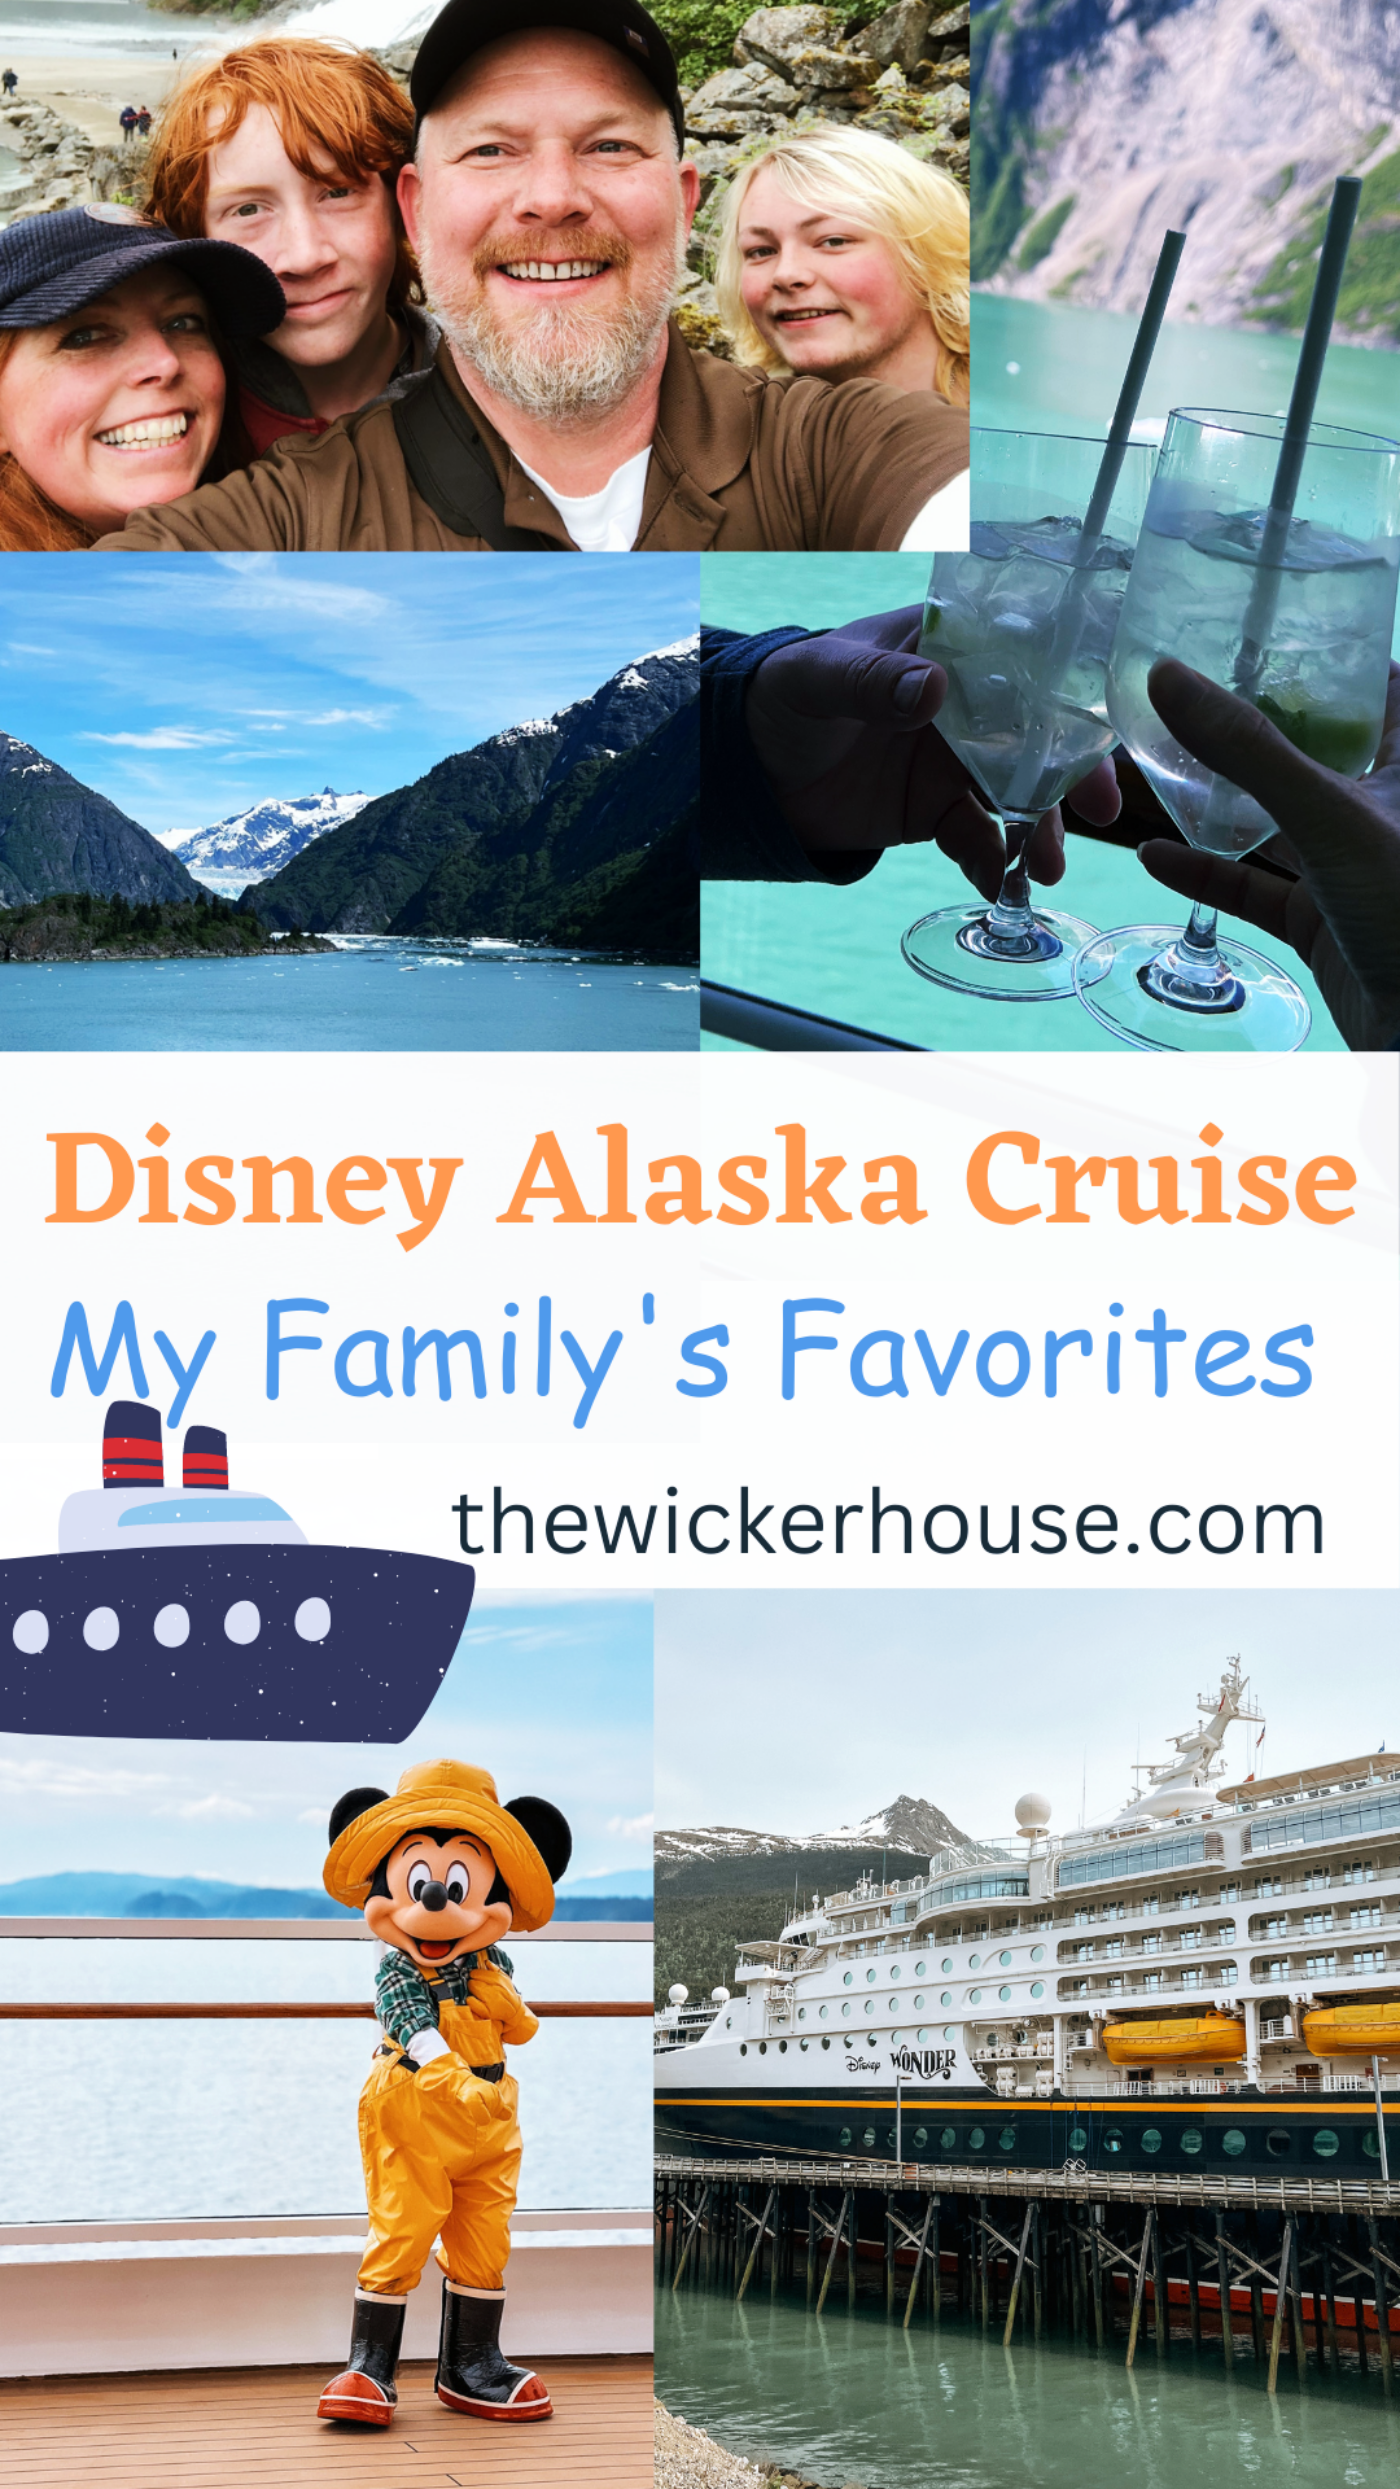 Disney Alaska Cruise – My Family’s Favorites